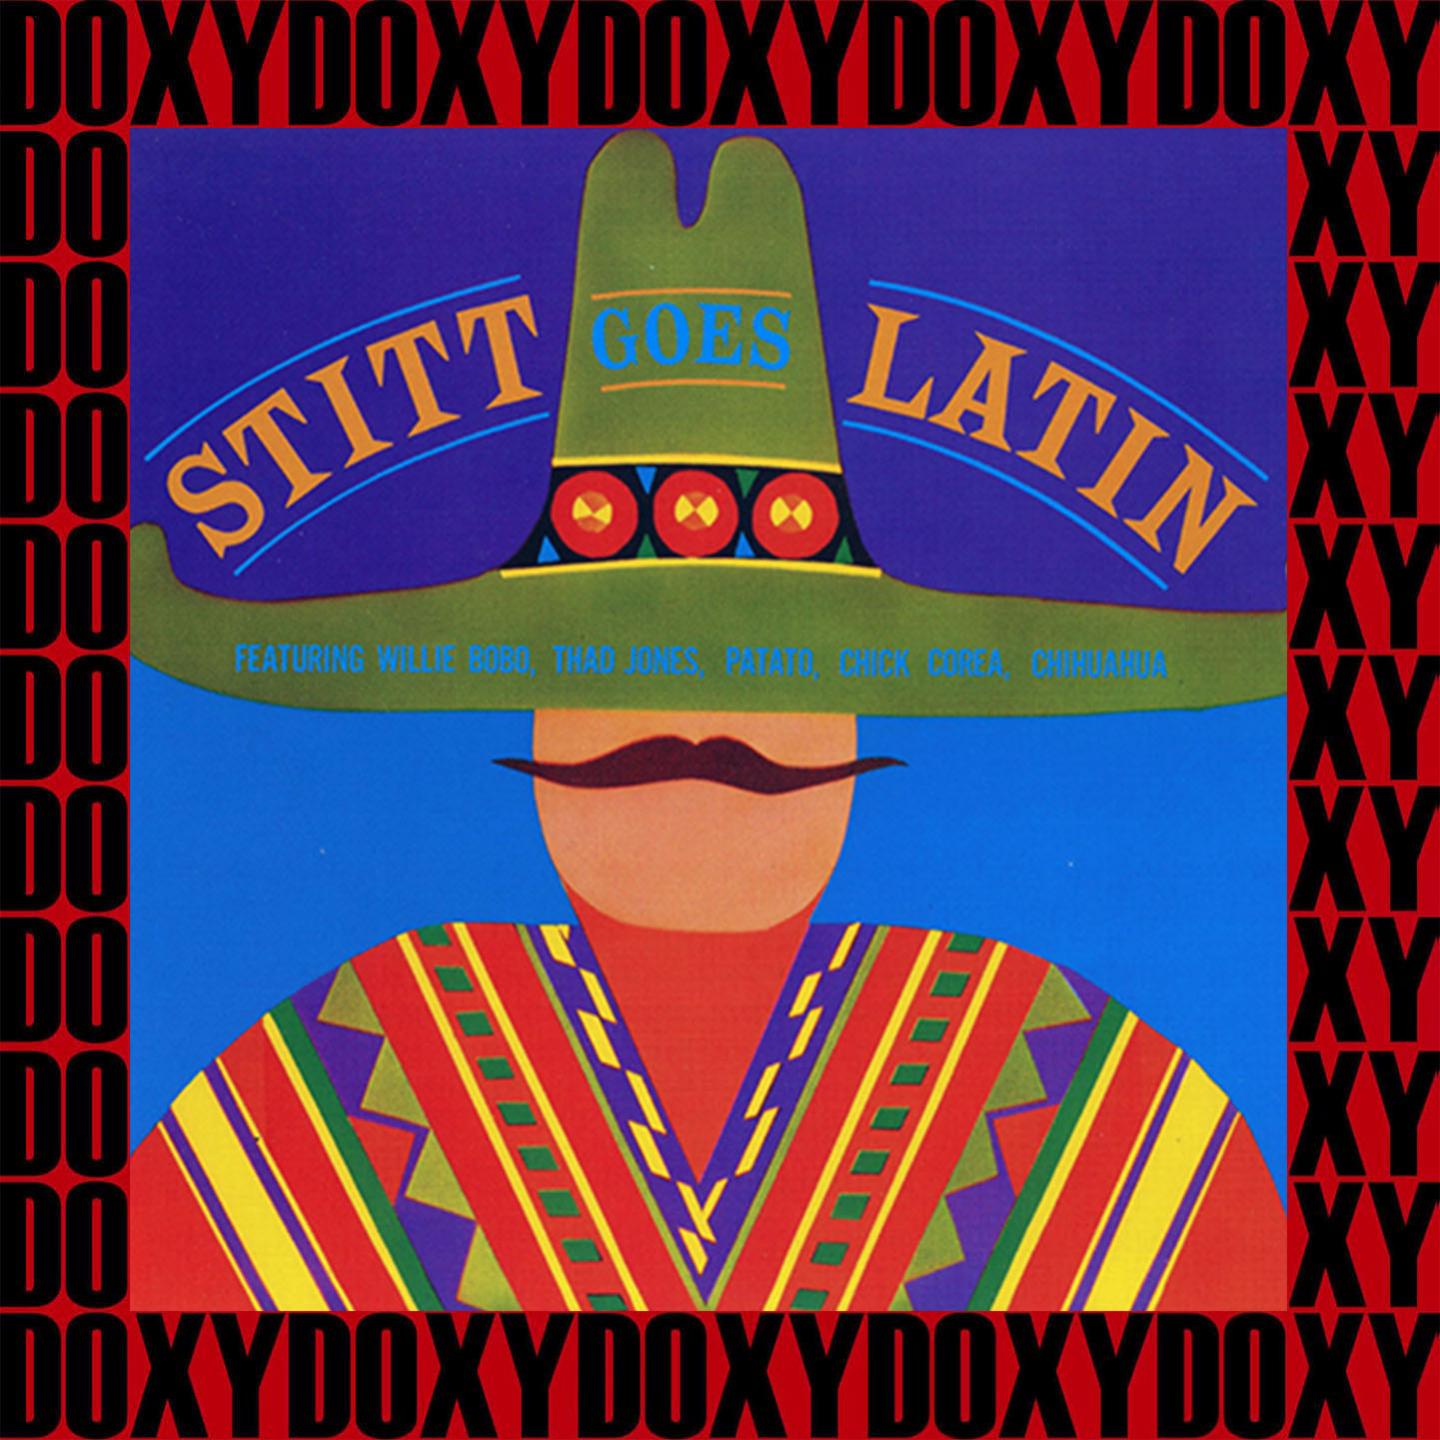 Stitt Goes Latin (Japanese, Remastered Version) (Doxy Collection)